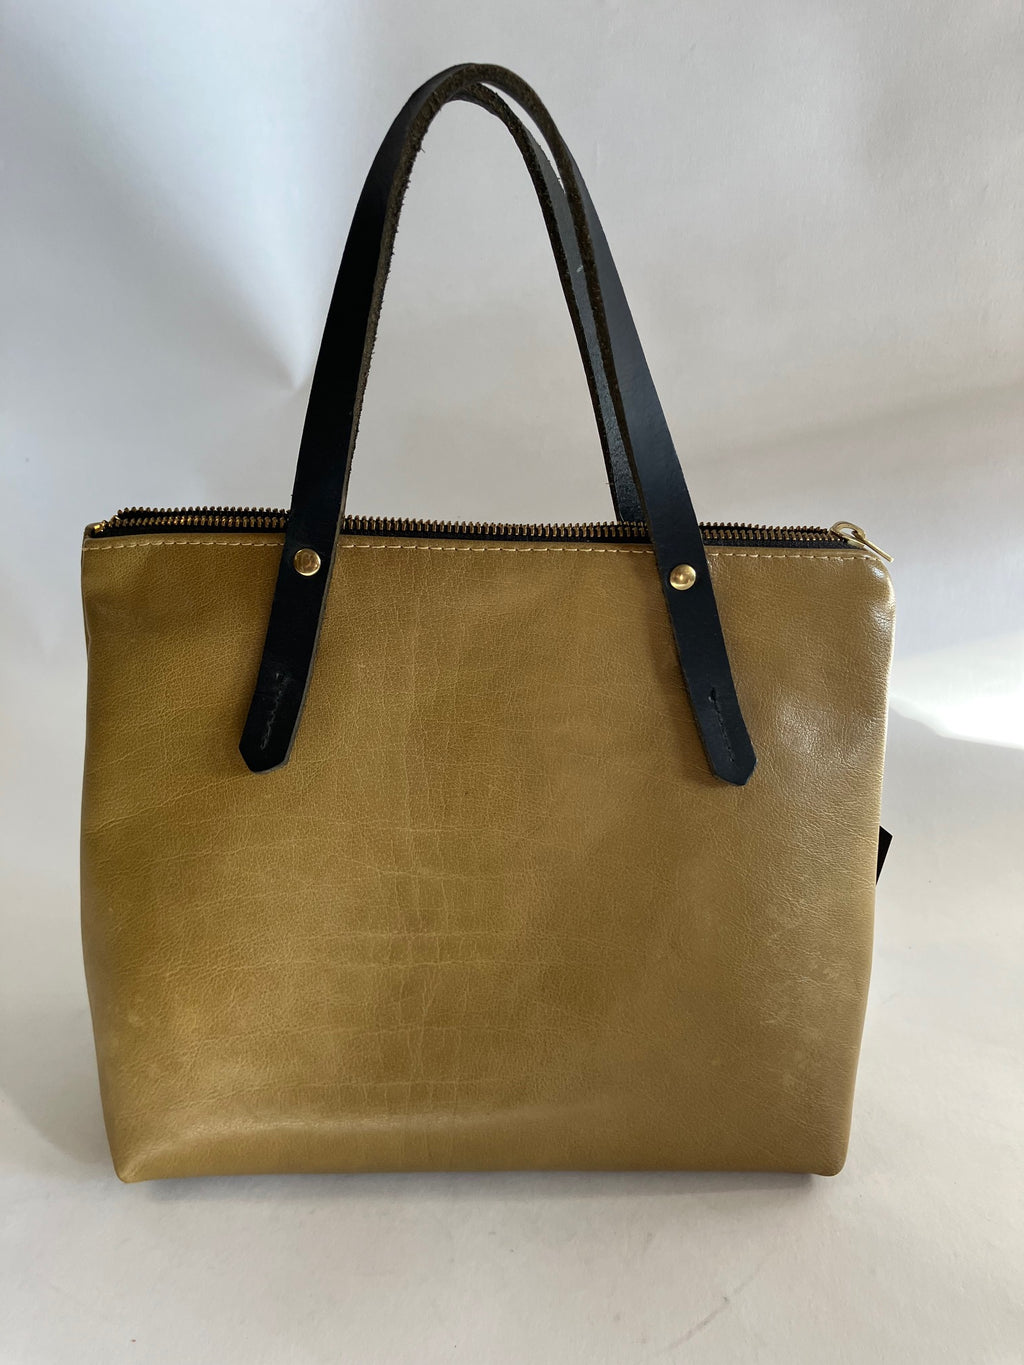 SAMPLE Large leather handbag with crossbody strap